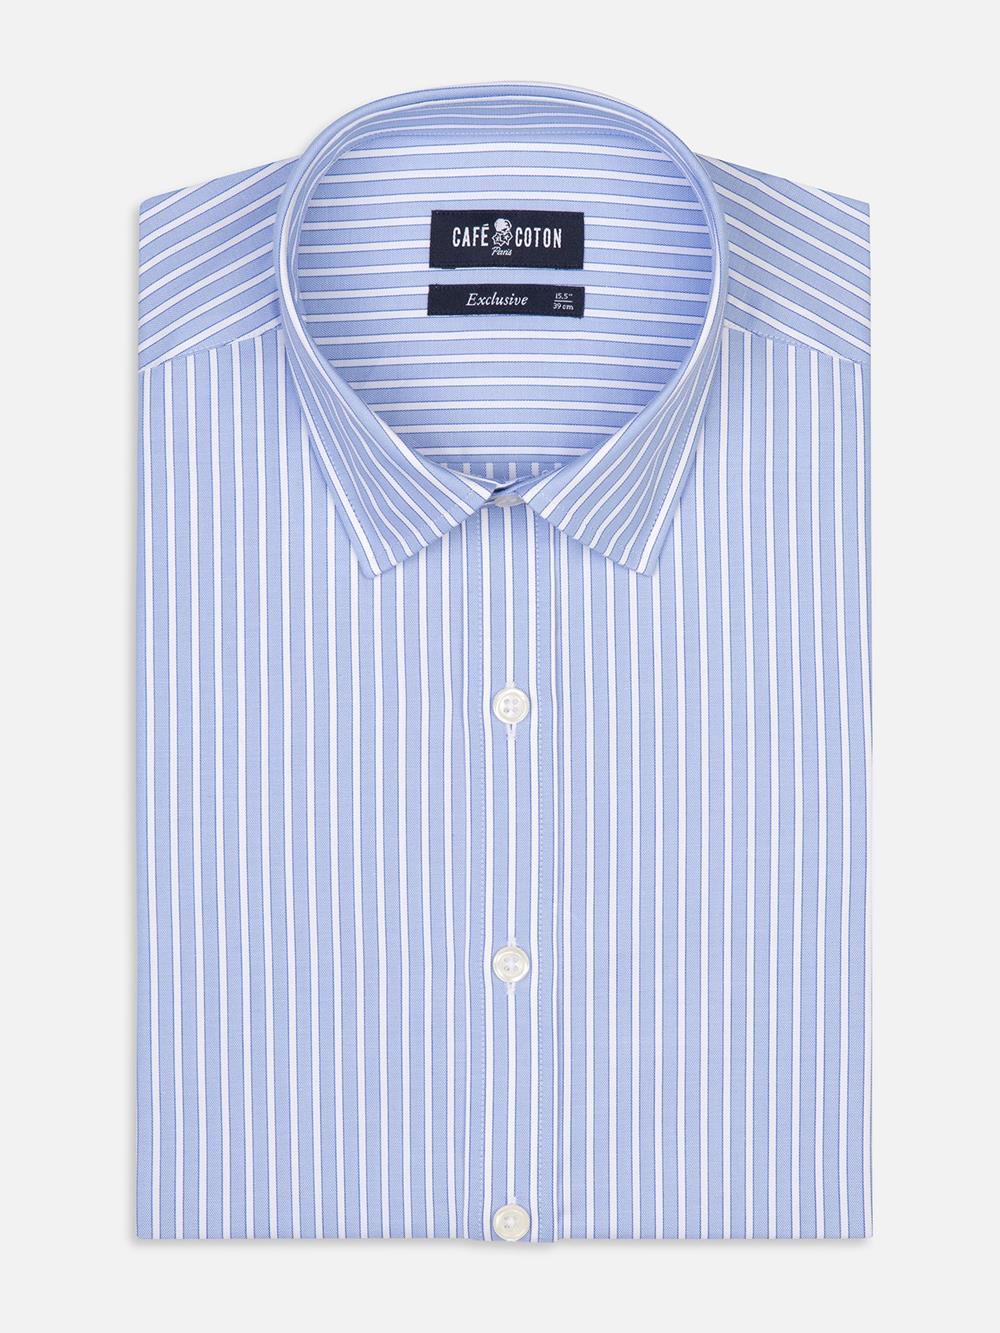 Colin sky blue striped slim fit shirt - Small collar